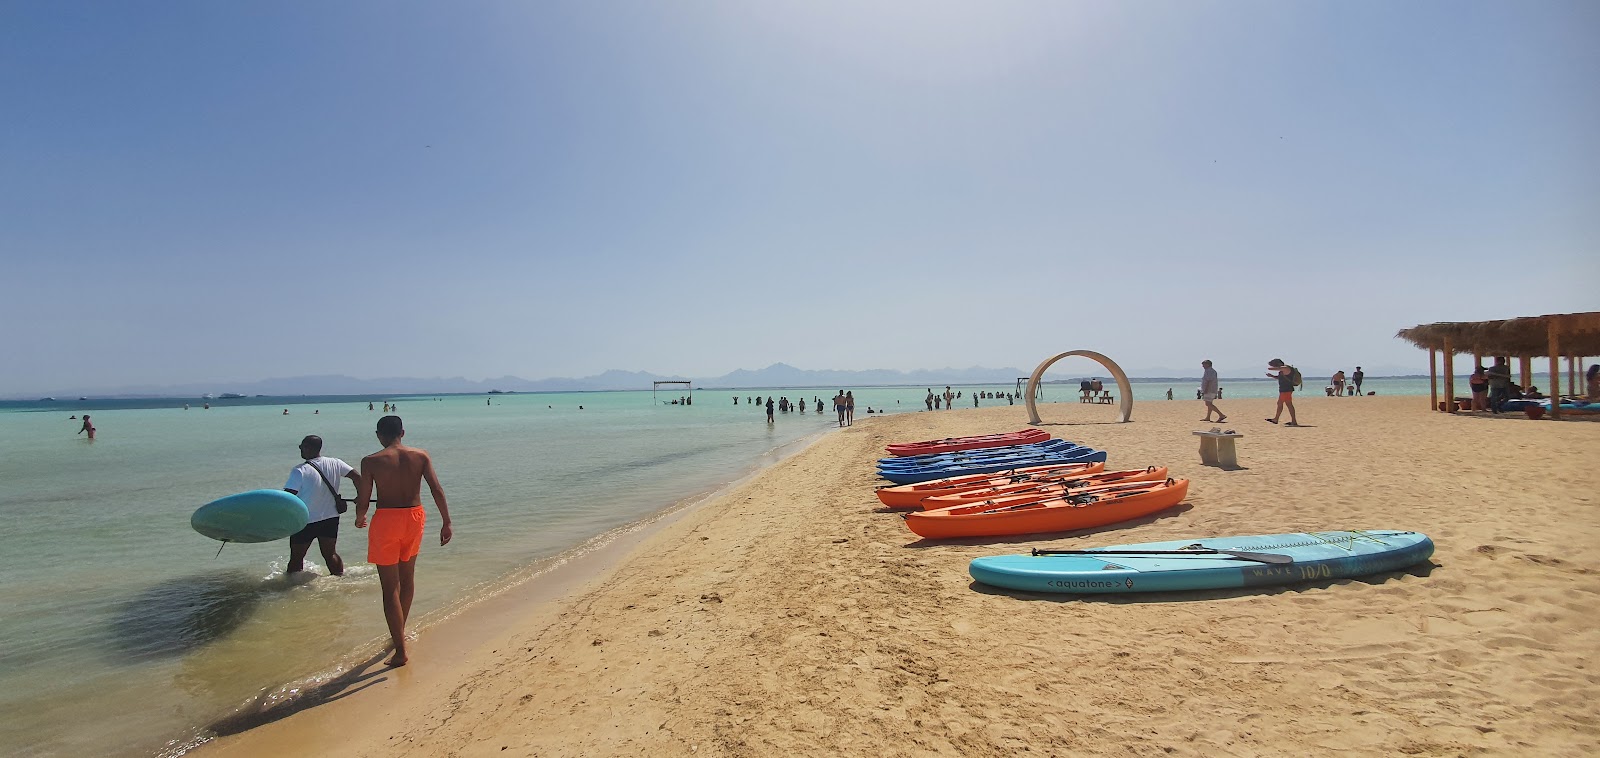 Foto de Orange Bay - lugar popular entre os apreciadores de relaxamento